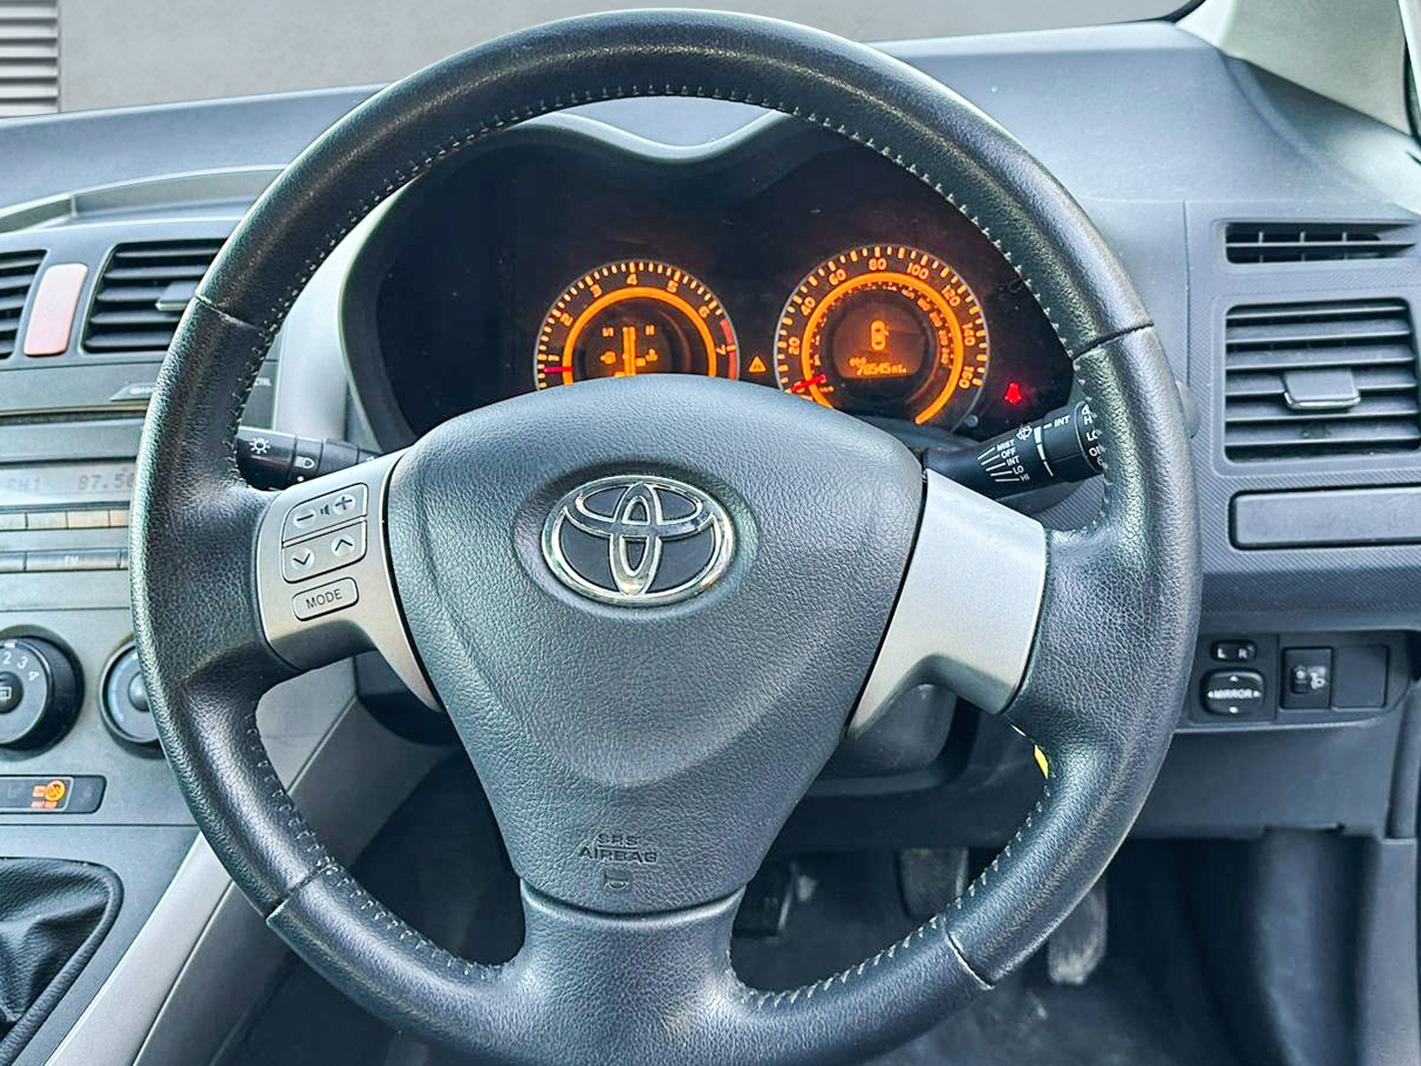 Toyota Auris 1.6 VVT-i TR Hatchback 5dr Petrol Manual (166 g/km, 124 bhp)